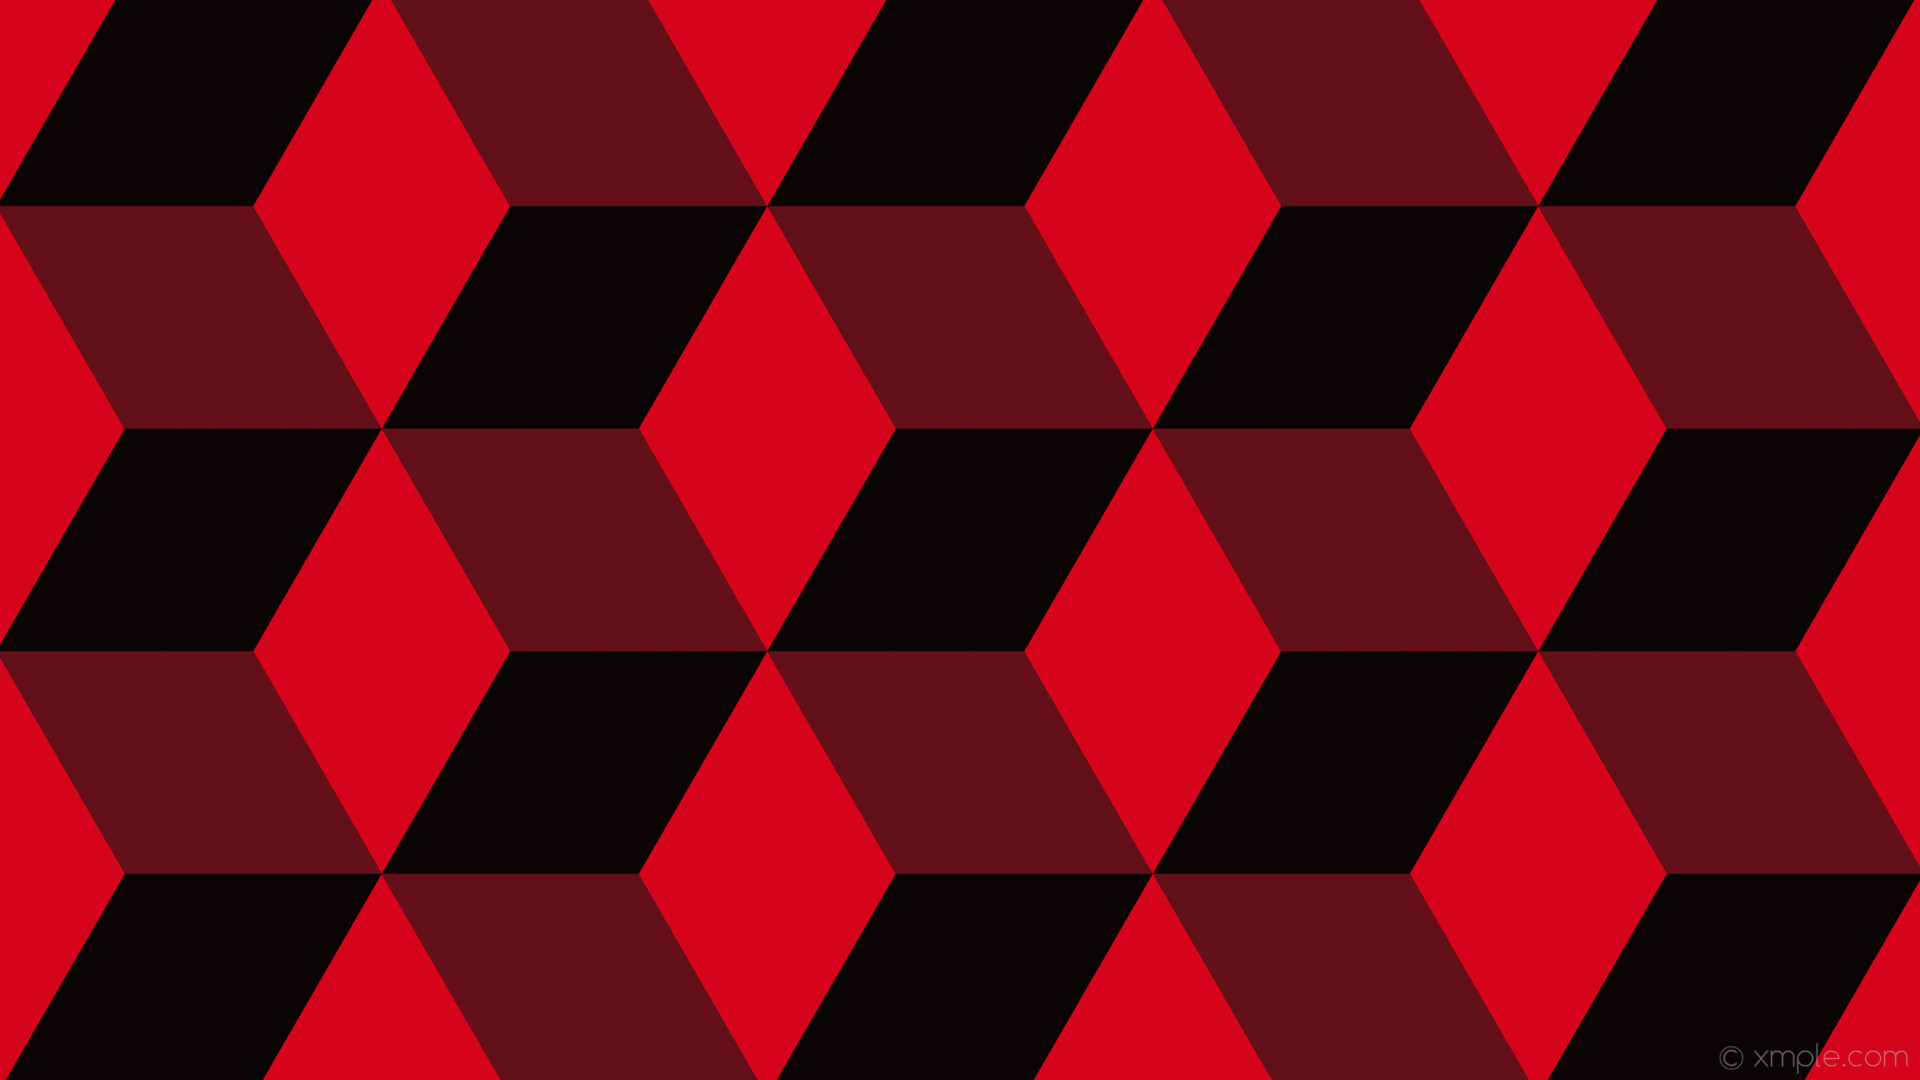 1920x1080 wallpaper black red 3d cubes #0a0404 #641019 #d6041a 30Â° 257px